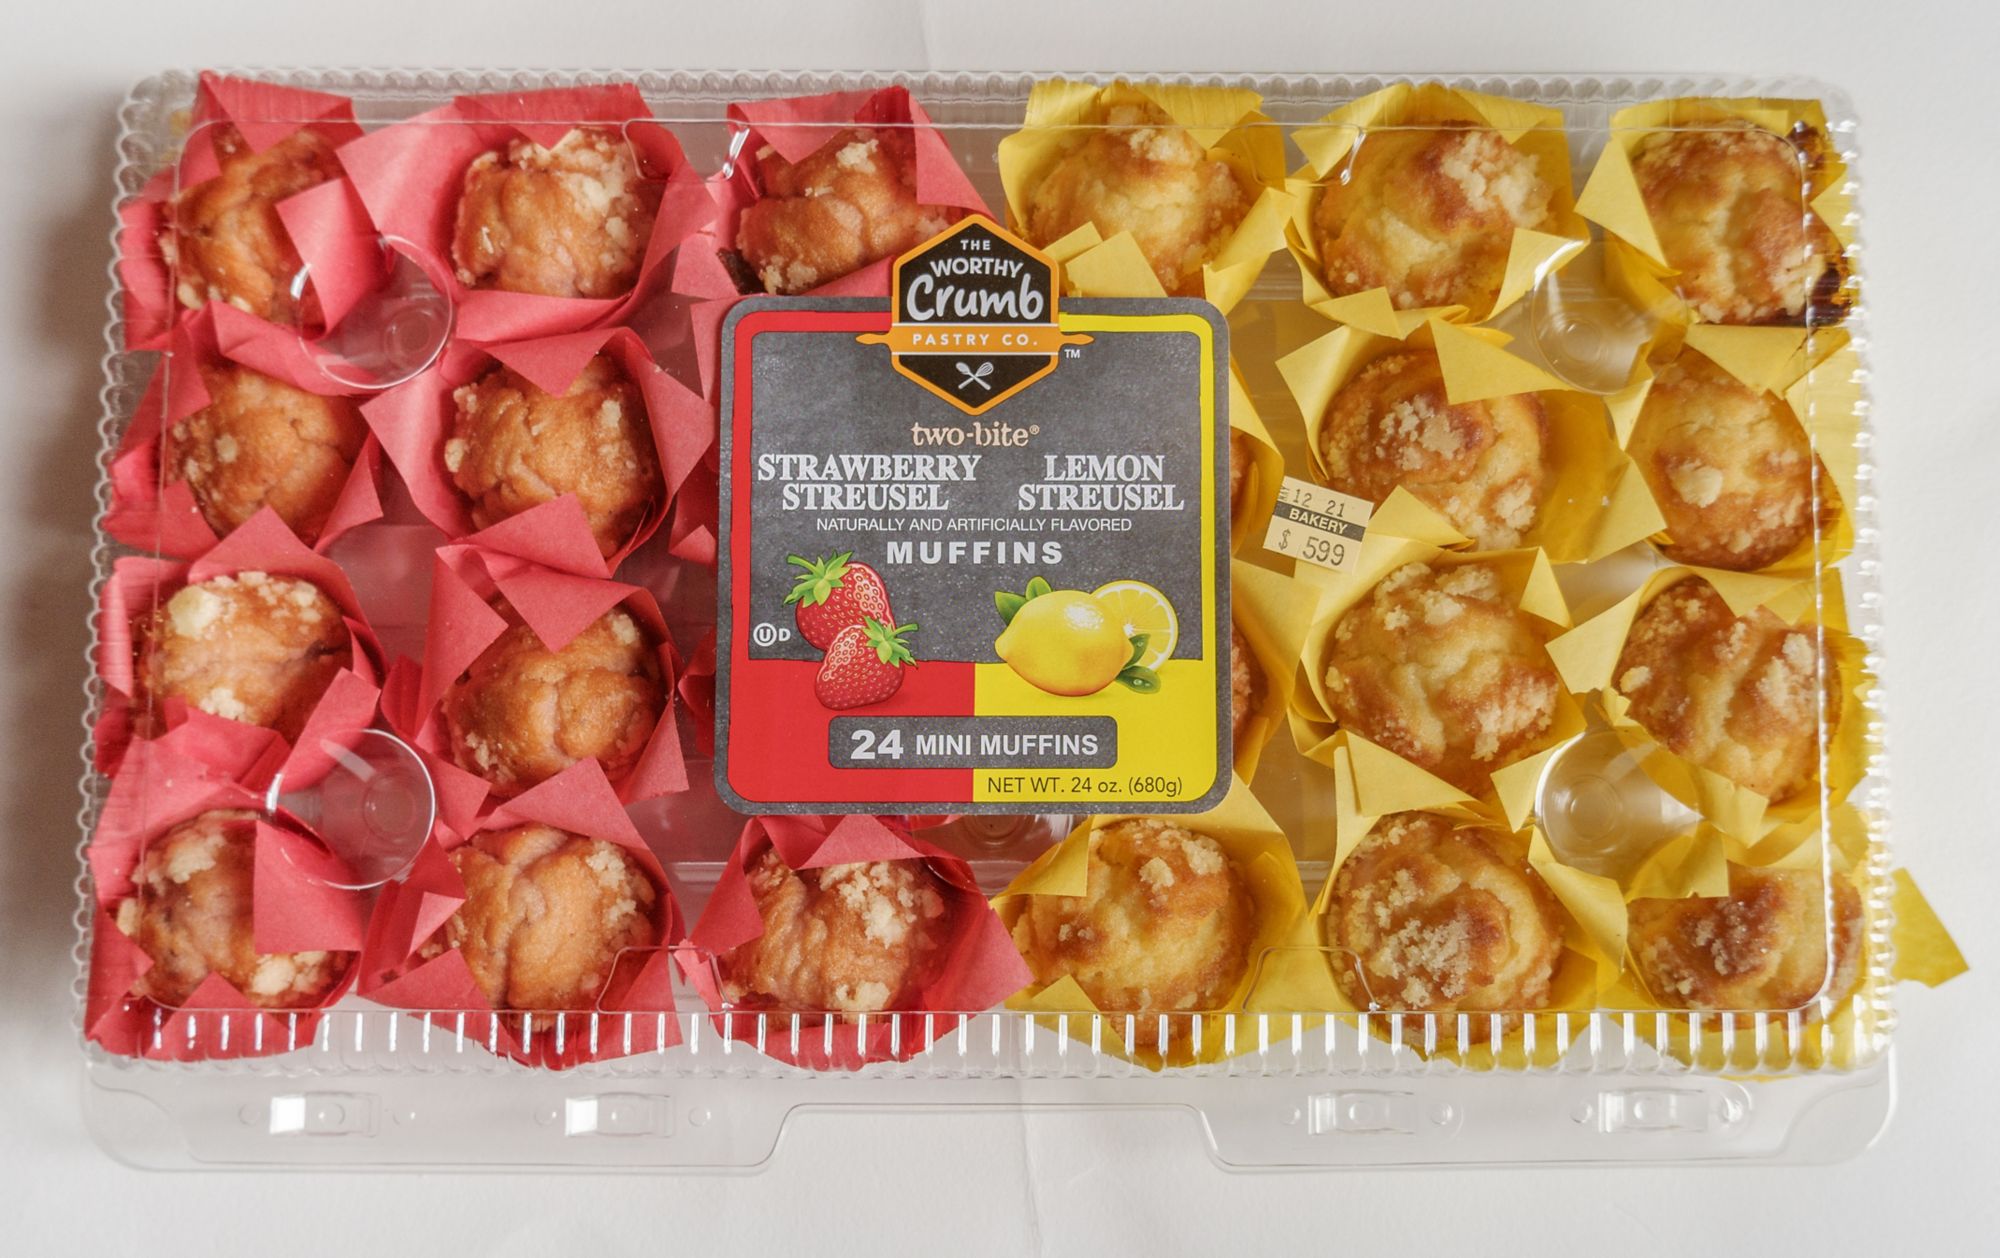 The Worthy Crumb Strawberry Streusel & Lemon Streusel Mini Muffins, 24 ct.